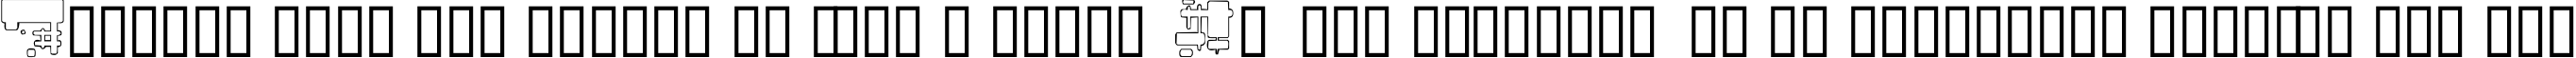 Пример написания шрифтом Future Boxes текста на испанском